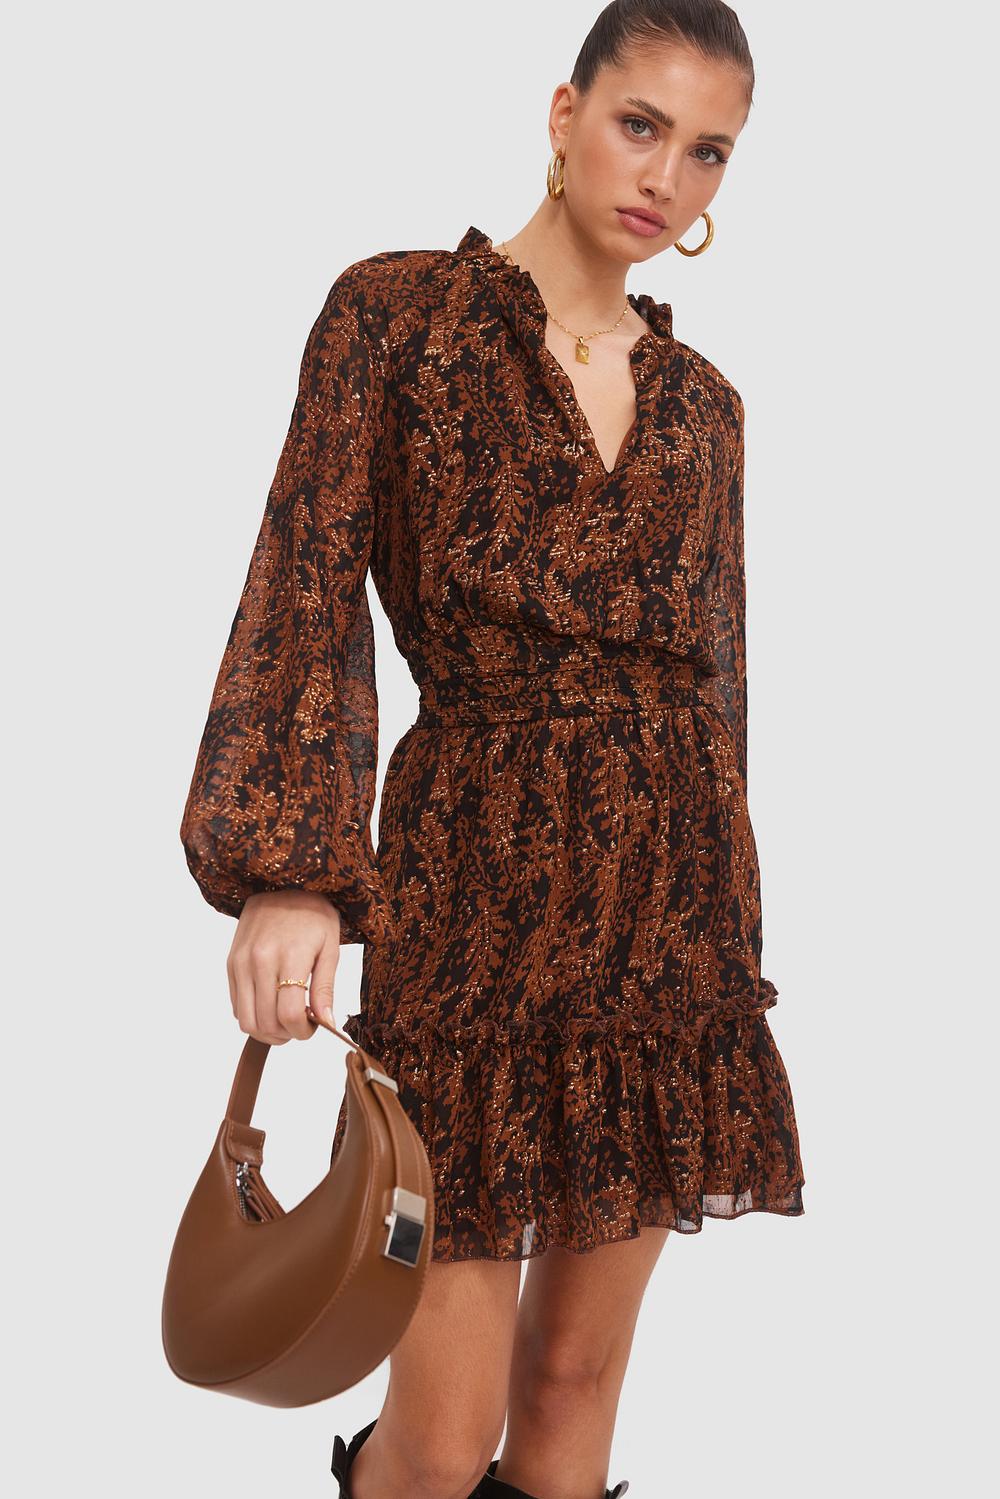 Brown dress with paisley print